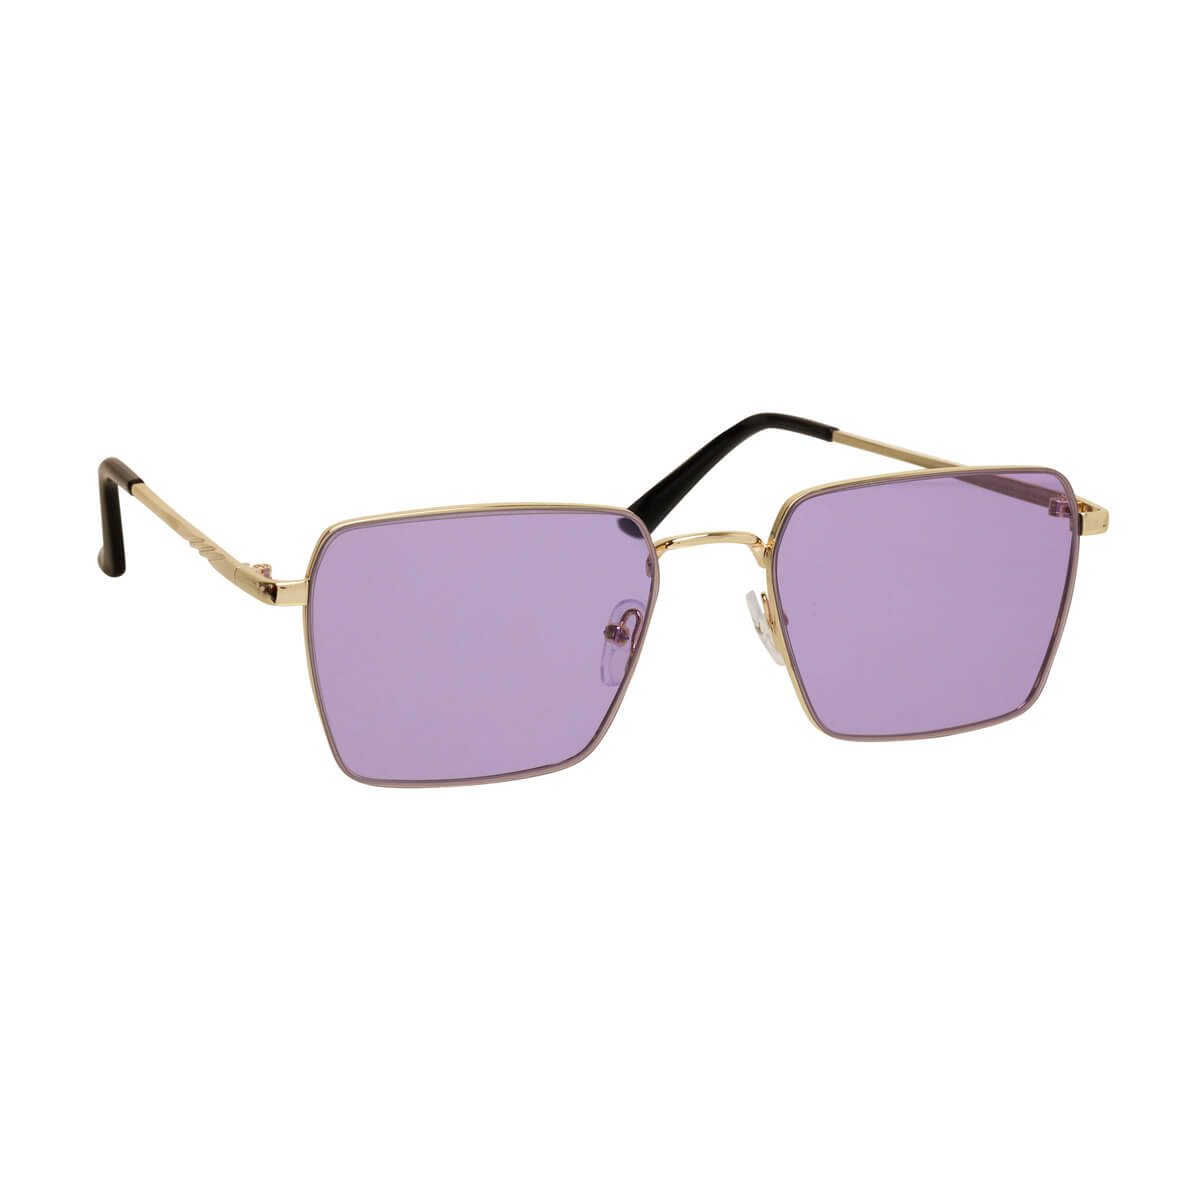 Metal -framed angular sunglasses